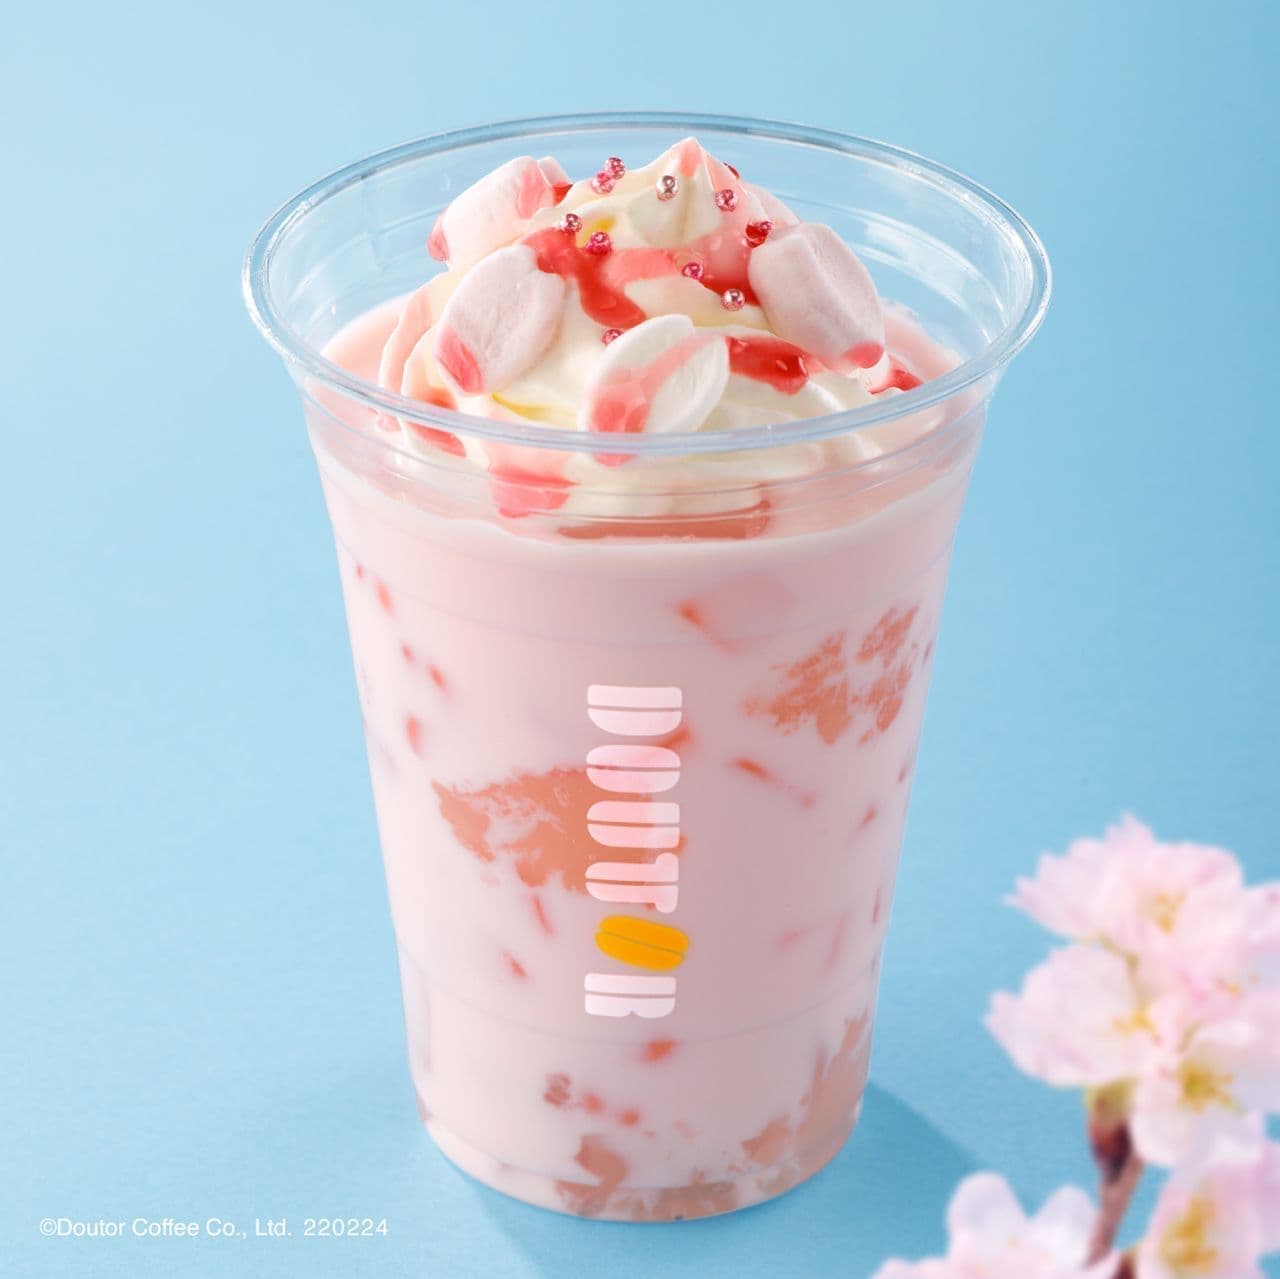 Doutor Coffee Shop "Marshmallow Fluffy Sakura Ore - Warabi Mochi